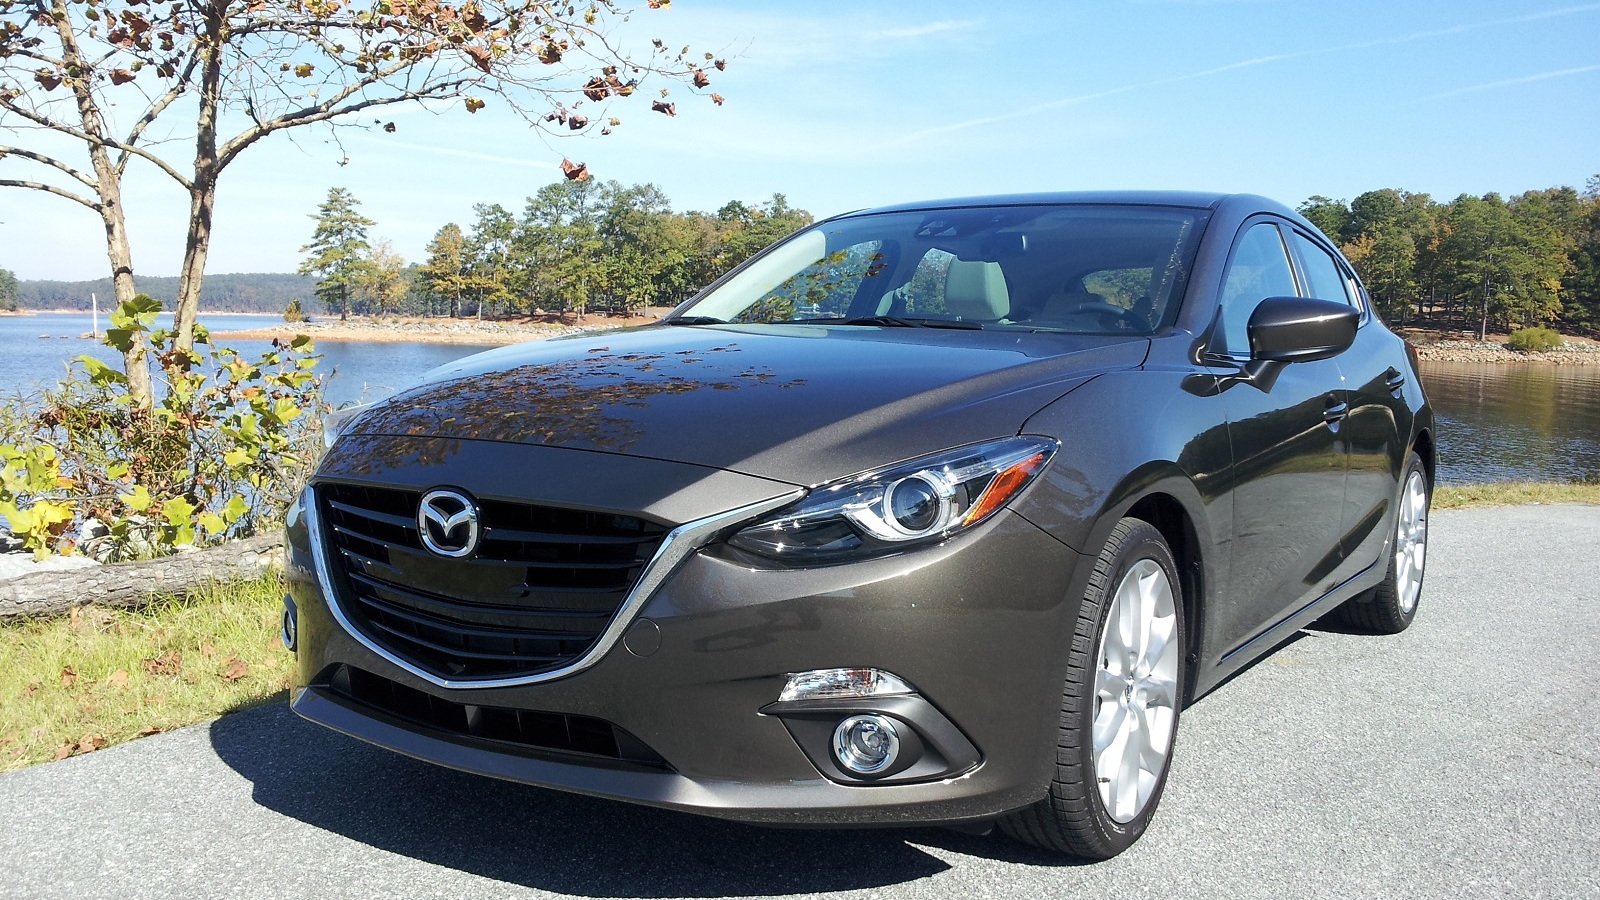 2014 Mazda 3, test drive, Atlanta region, Oct 2013